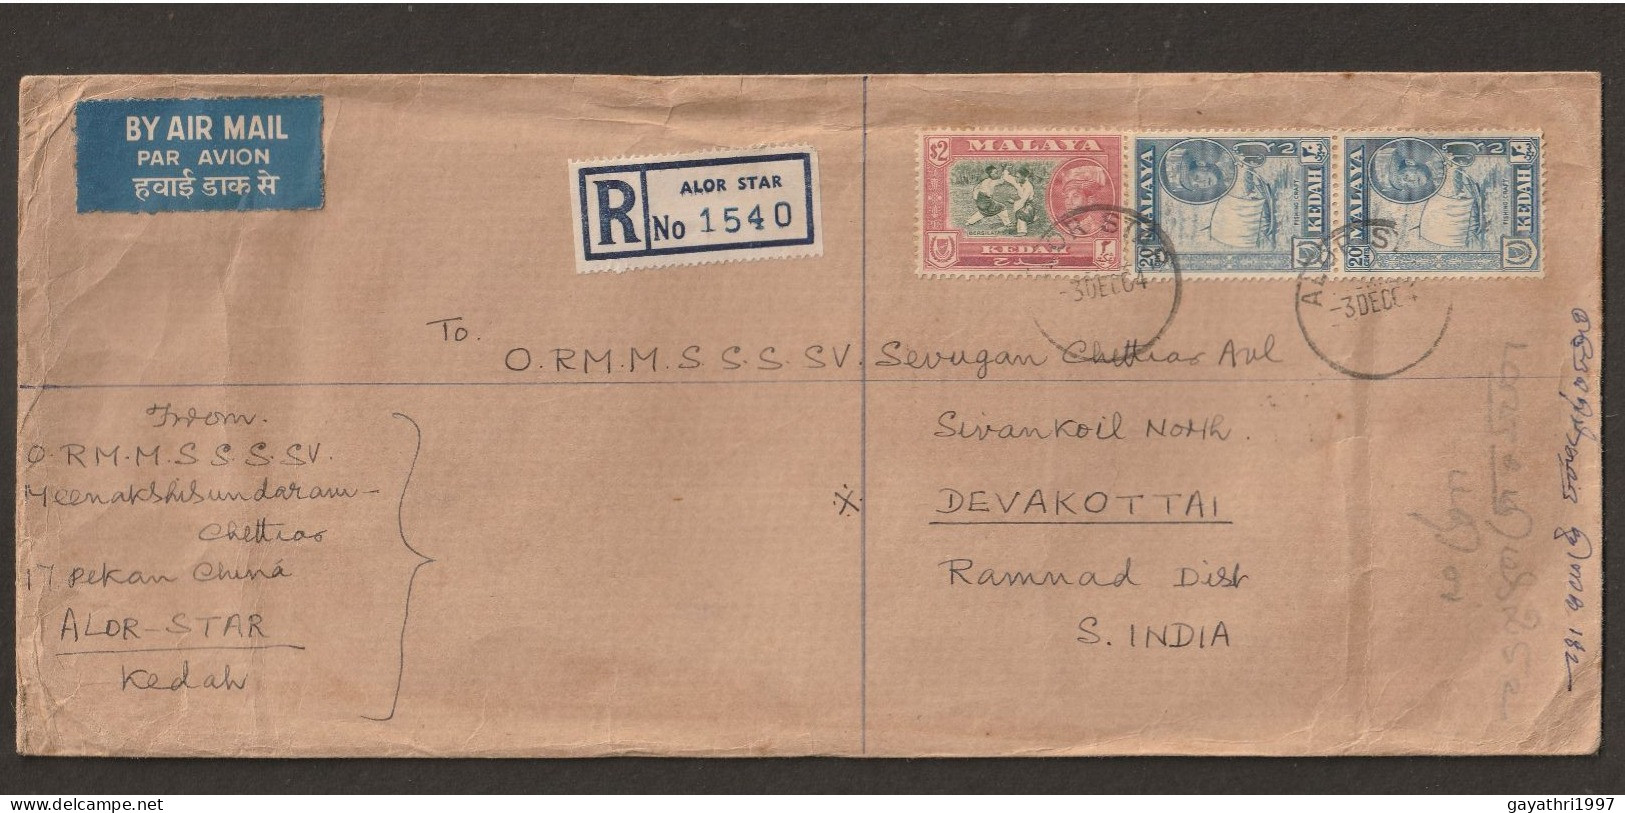 Malaya 1964 Malaya Stamp And Kedah Stamp  Used From Malaya To India Long Cover High Value Stamp(L12) - Kedah